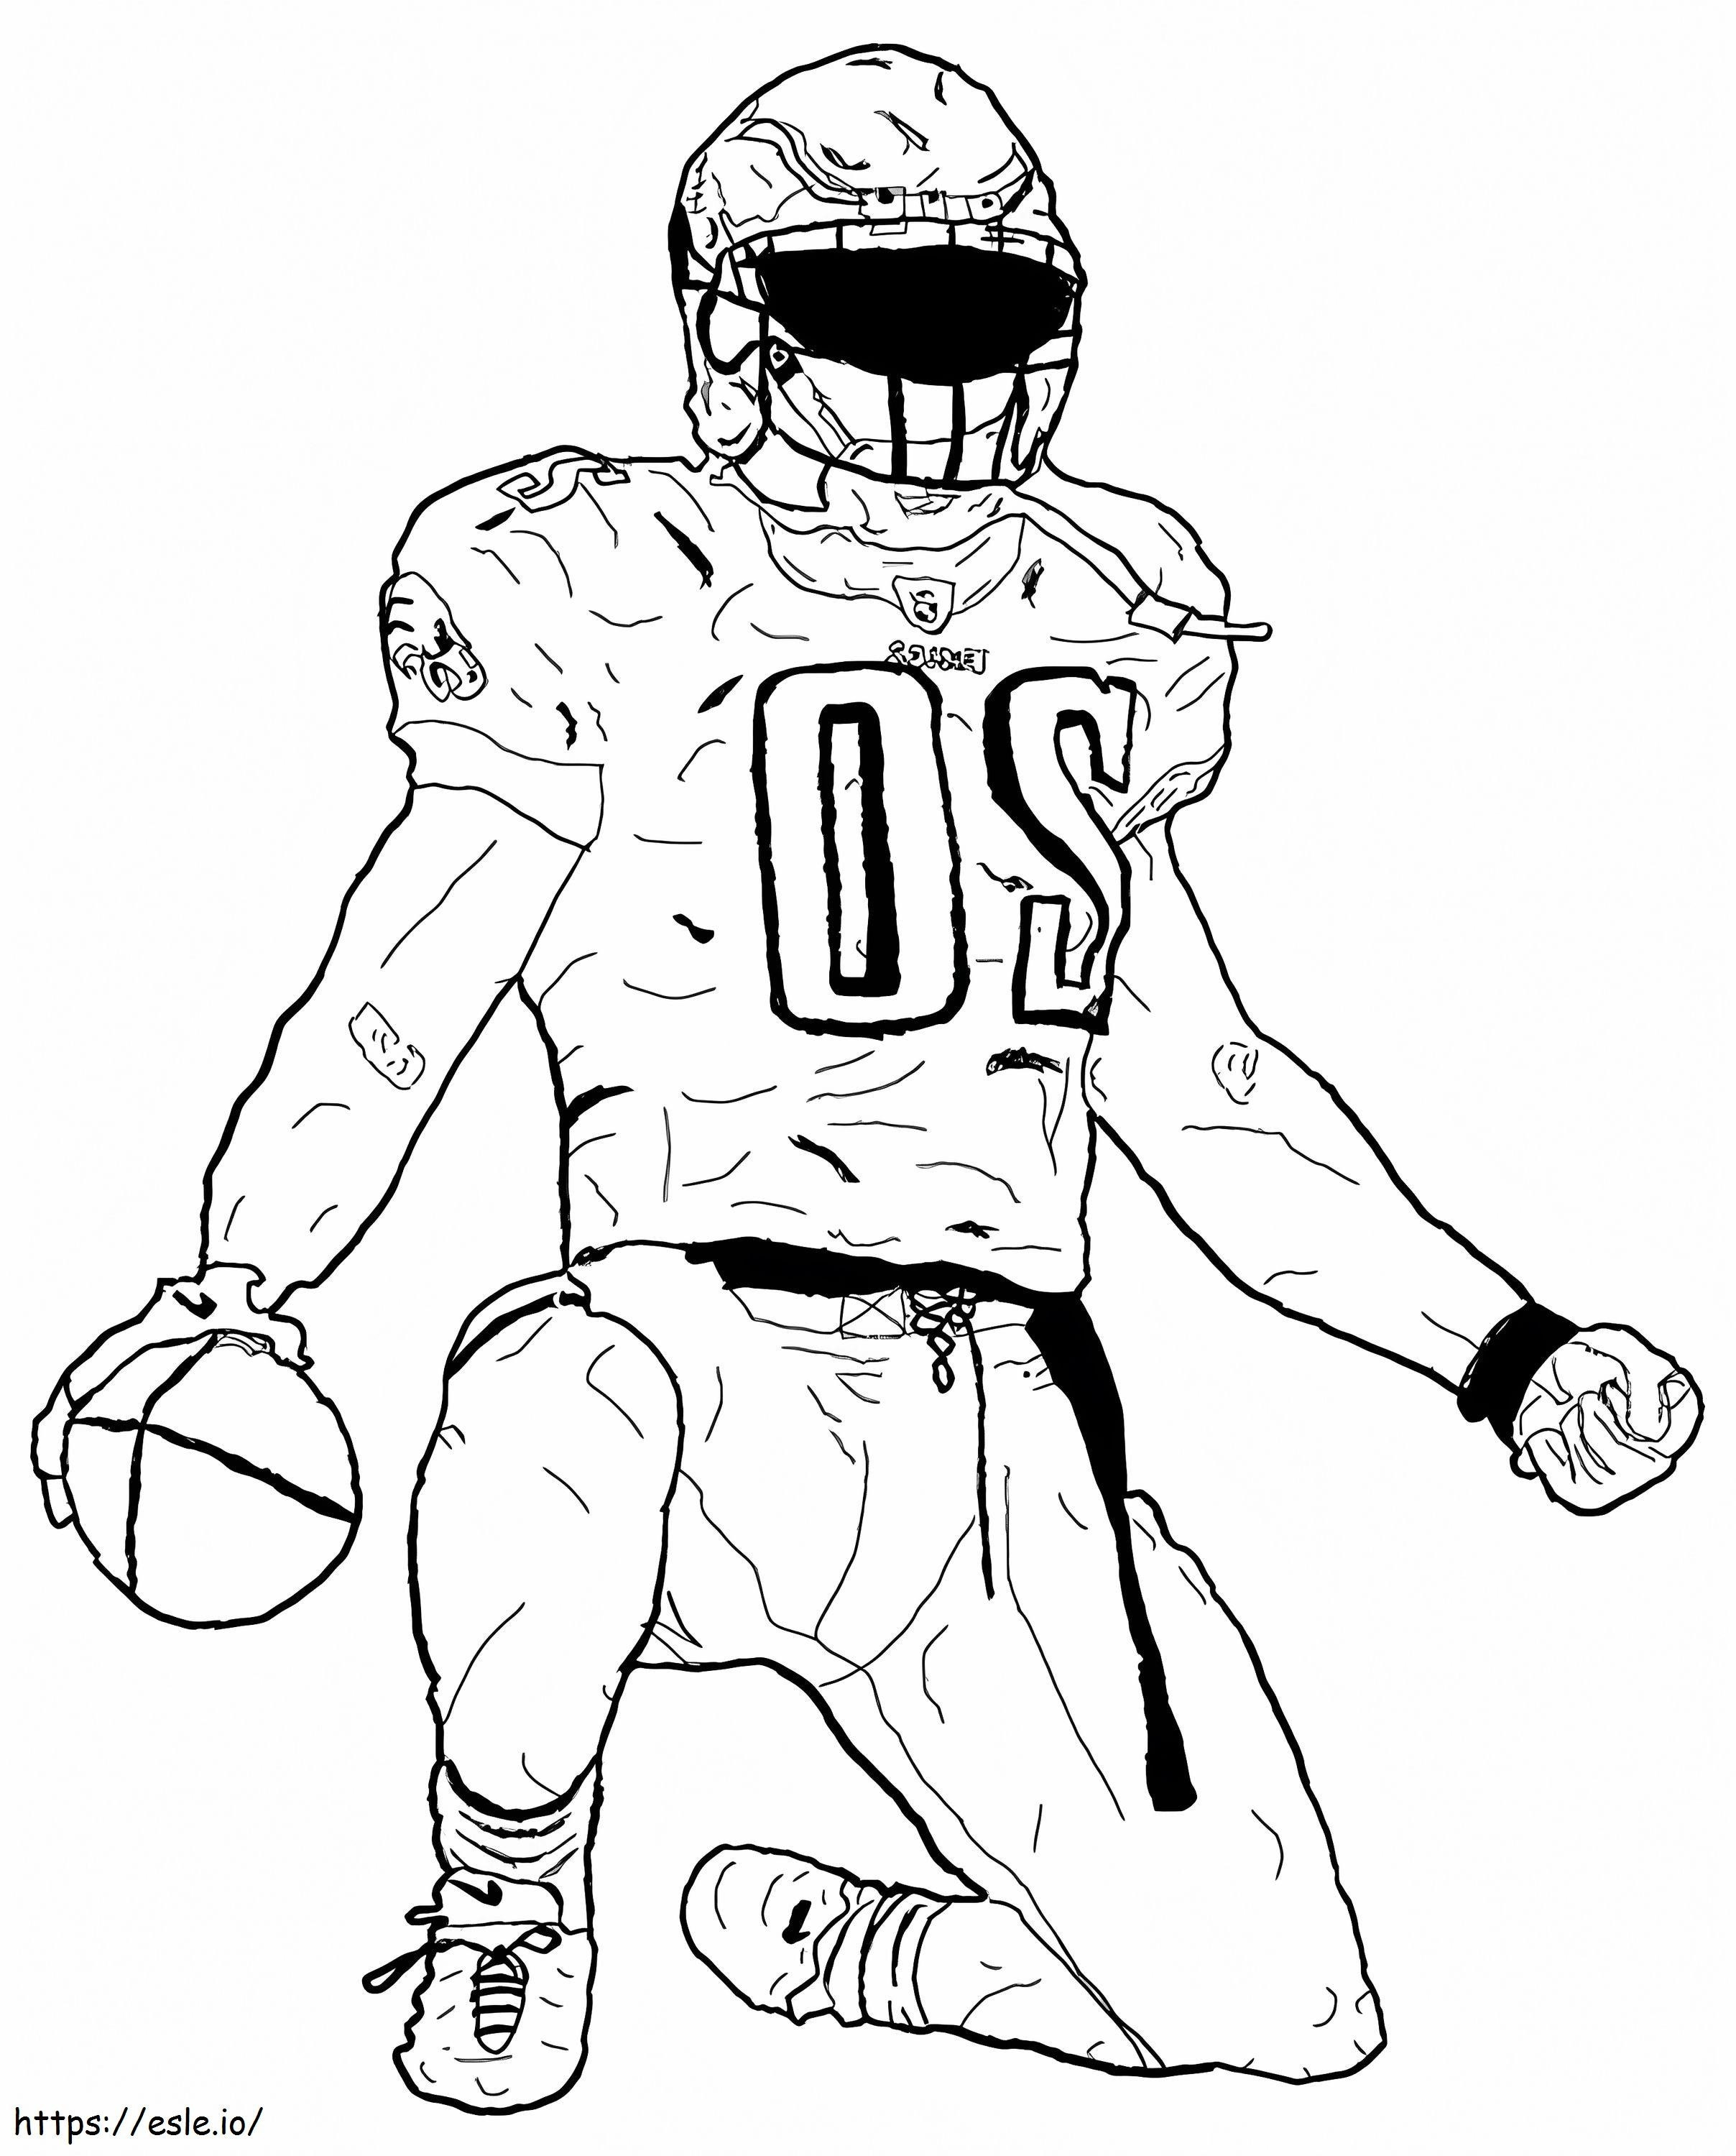 Printable Football Player coloring page